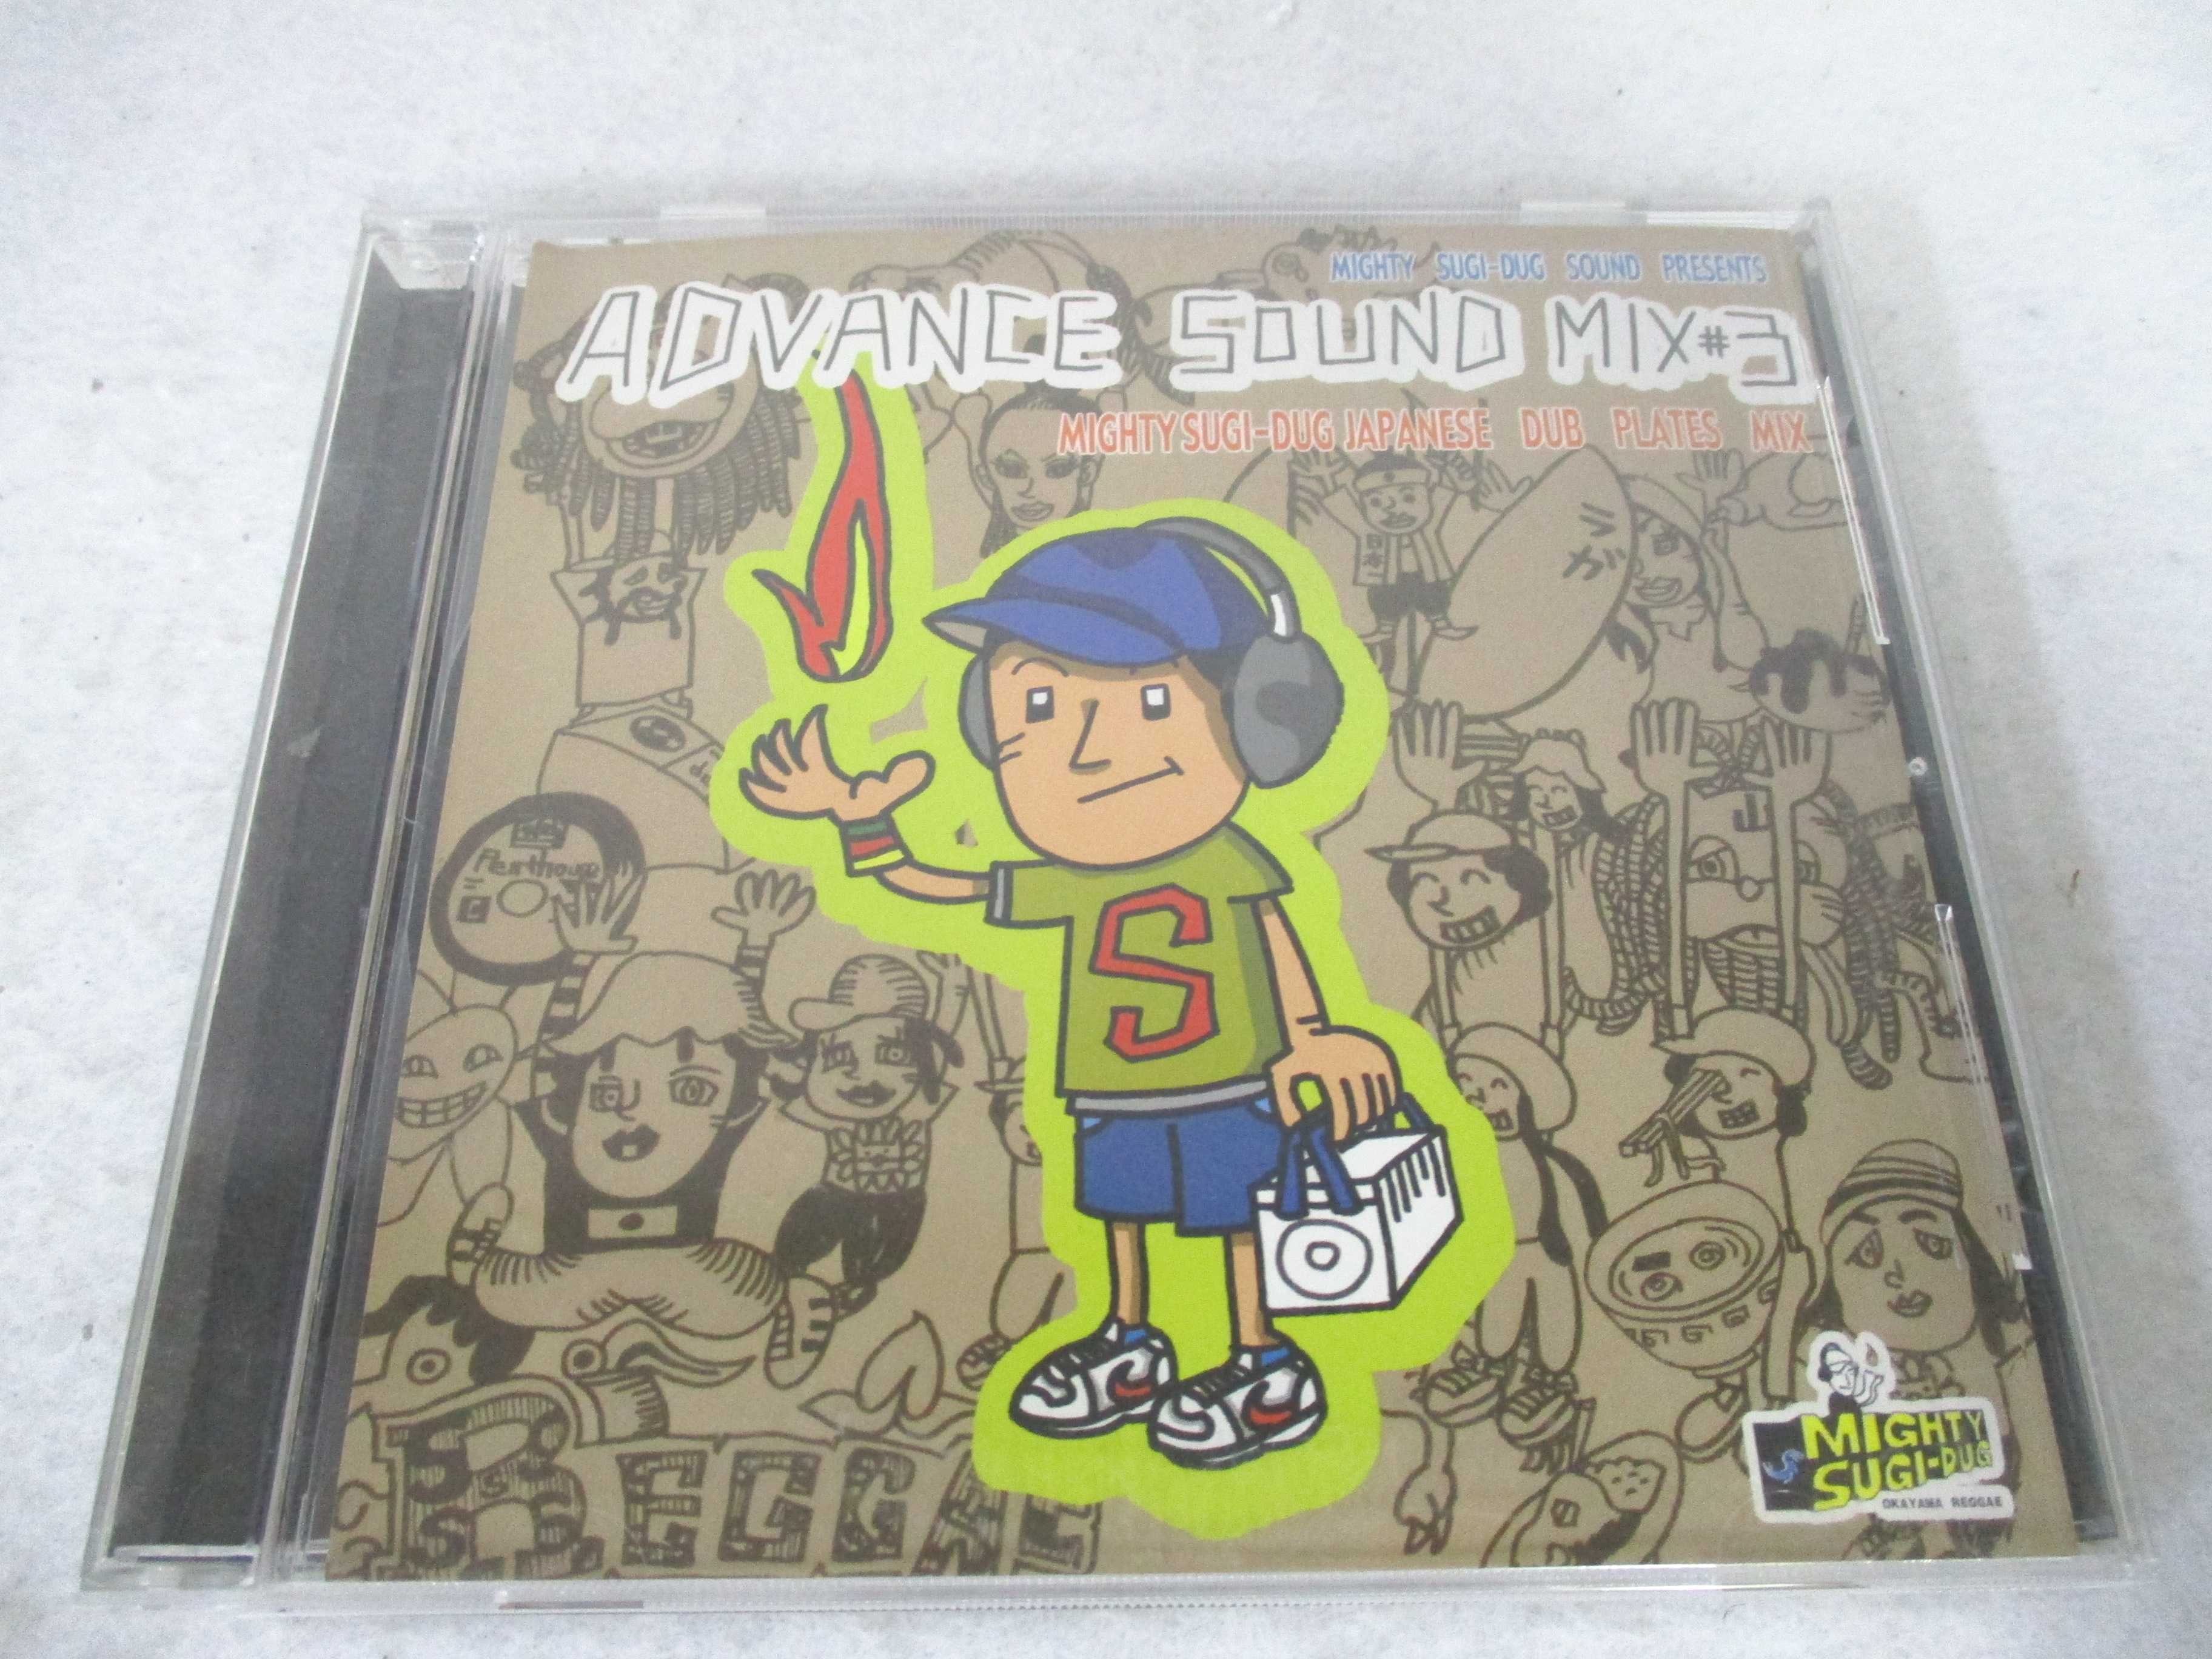 AC01882 【中古】 【CD】 ADVANCE SOUND MIX#3/MIGHTY SUGI-DUB SOUND